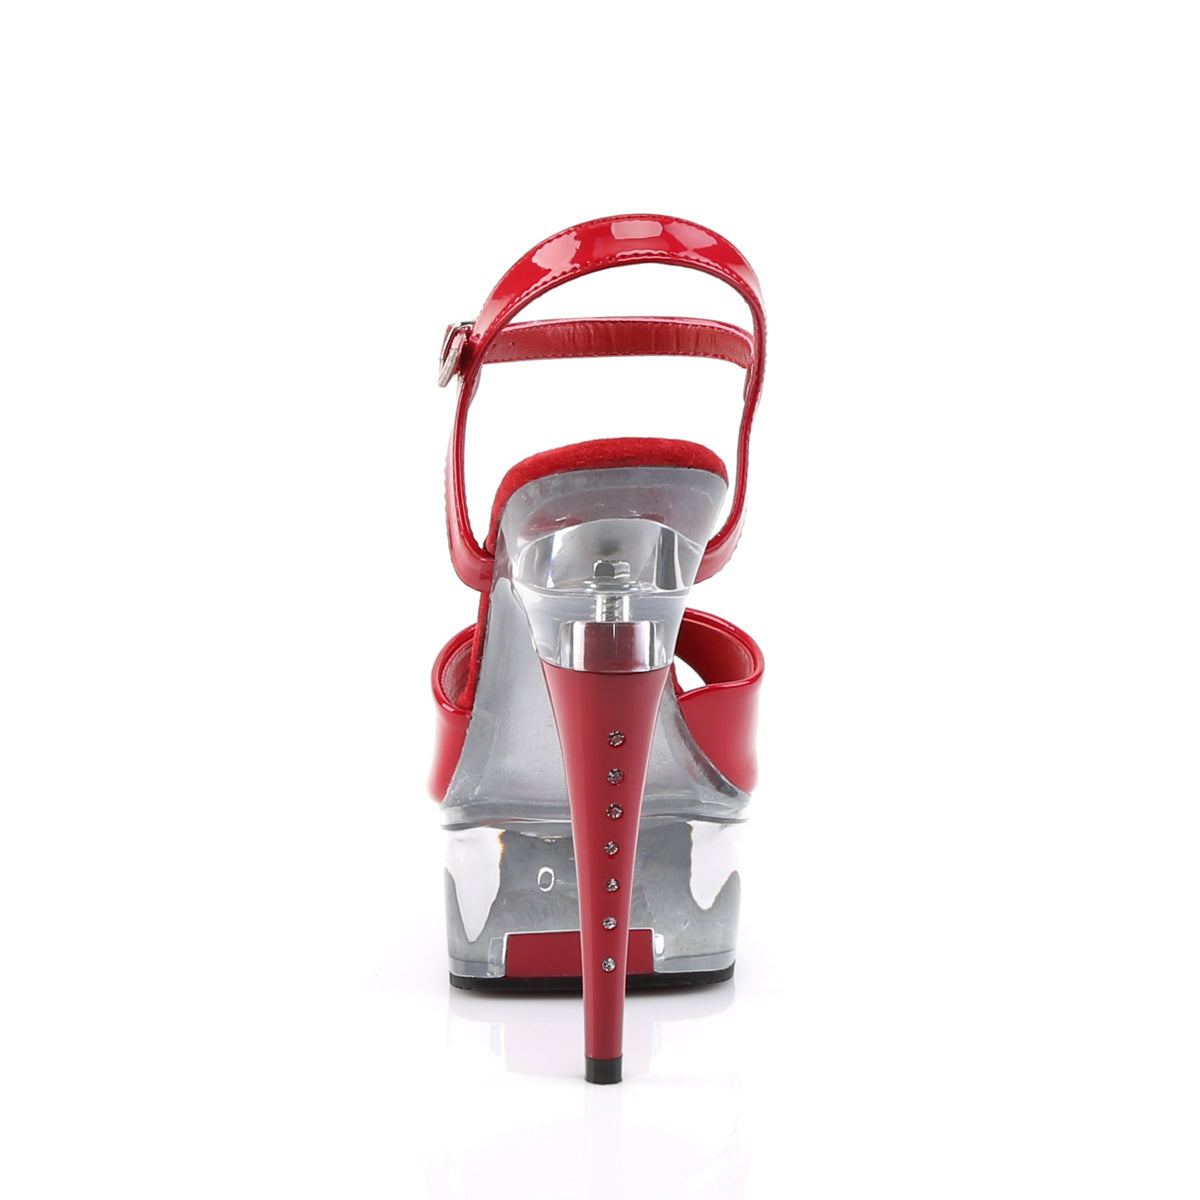 Pleaser Womens Sandals CAPTIVA-609 Red Pat/Clr